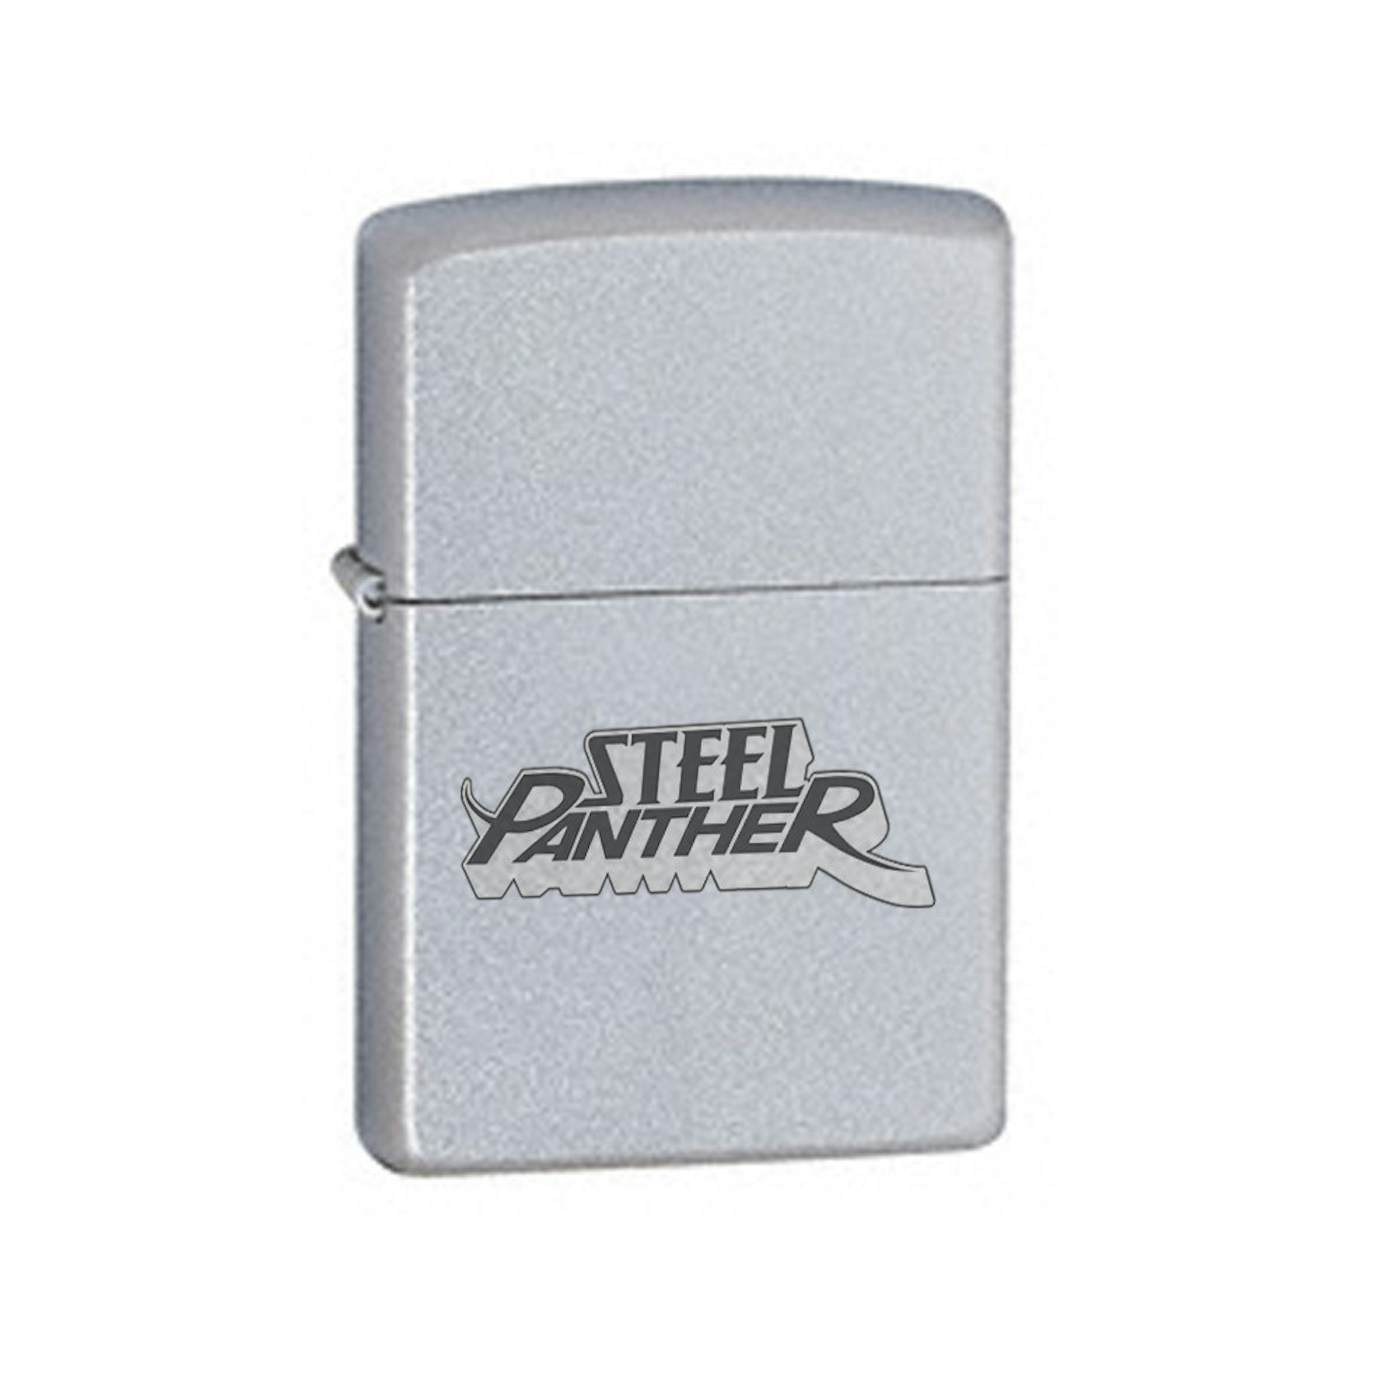 Steel Panther Lighter